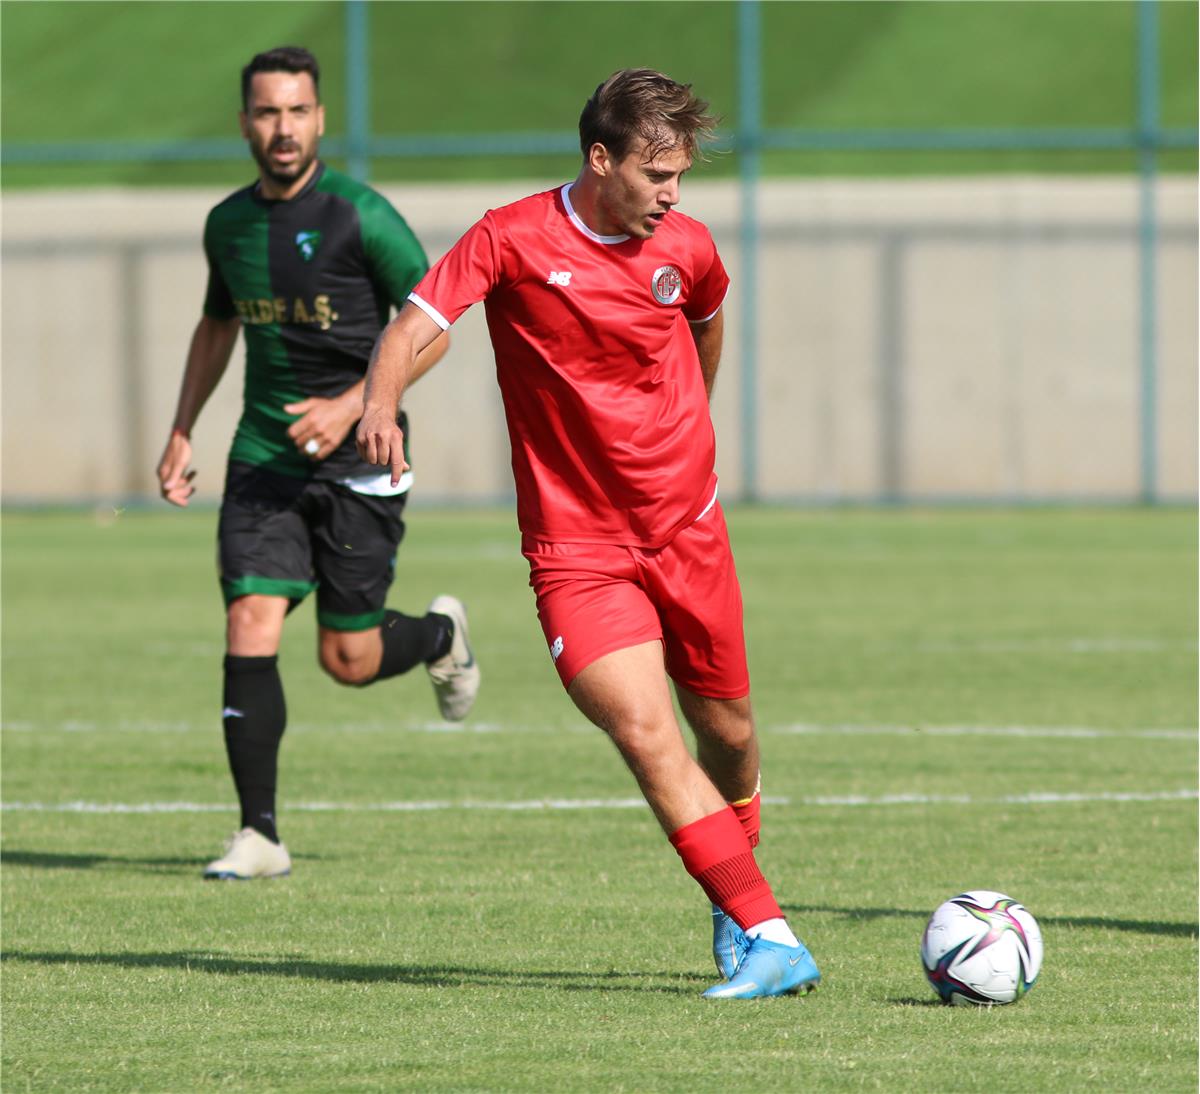 Fraport TAV Antalyaspor 0-1 Kocaelispor